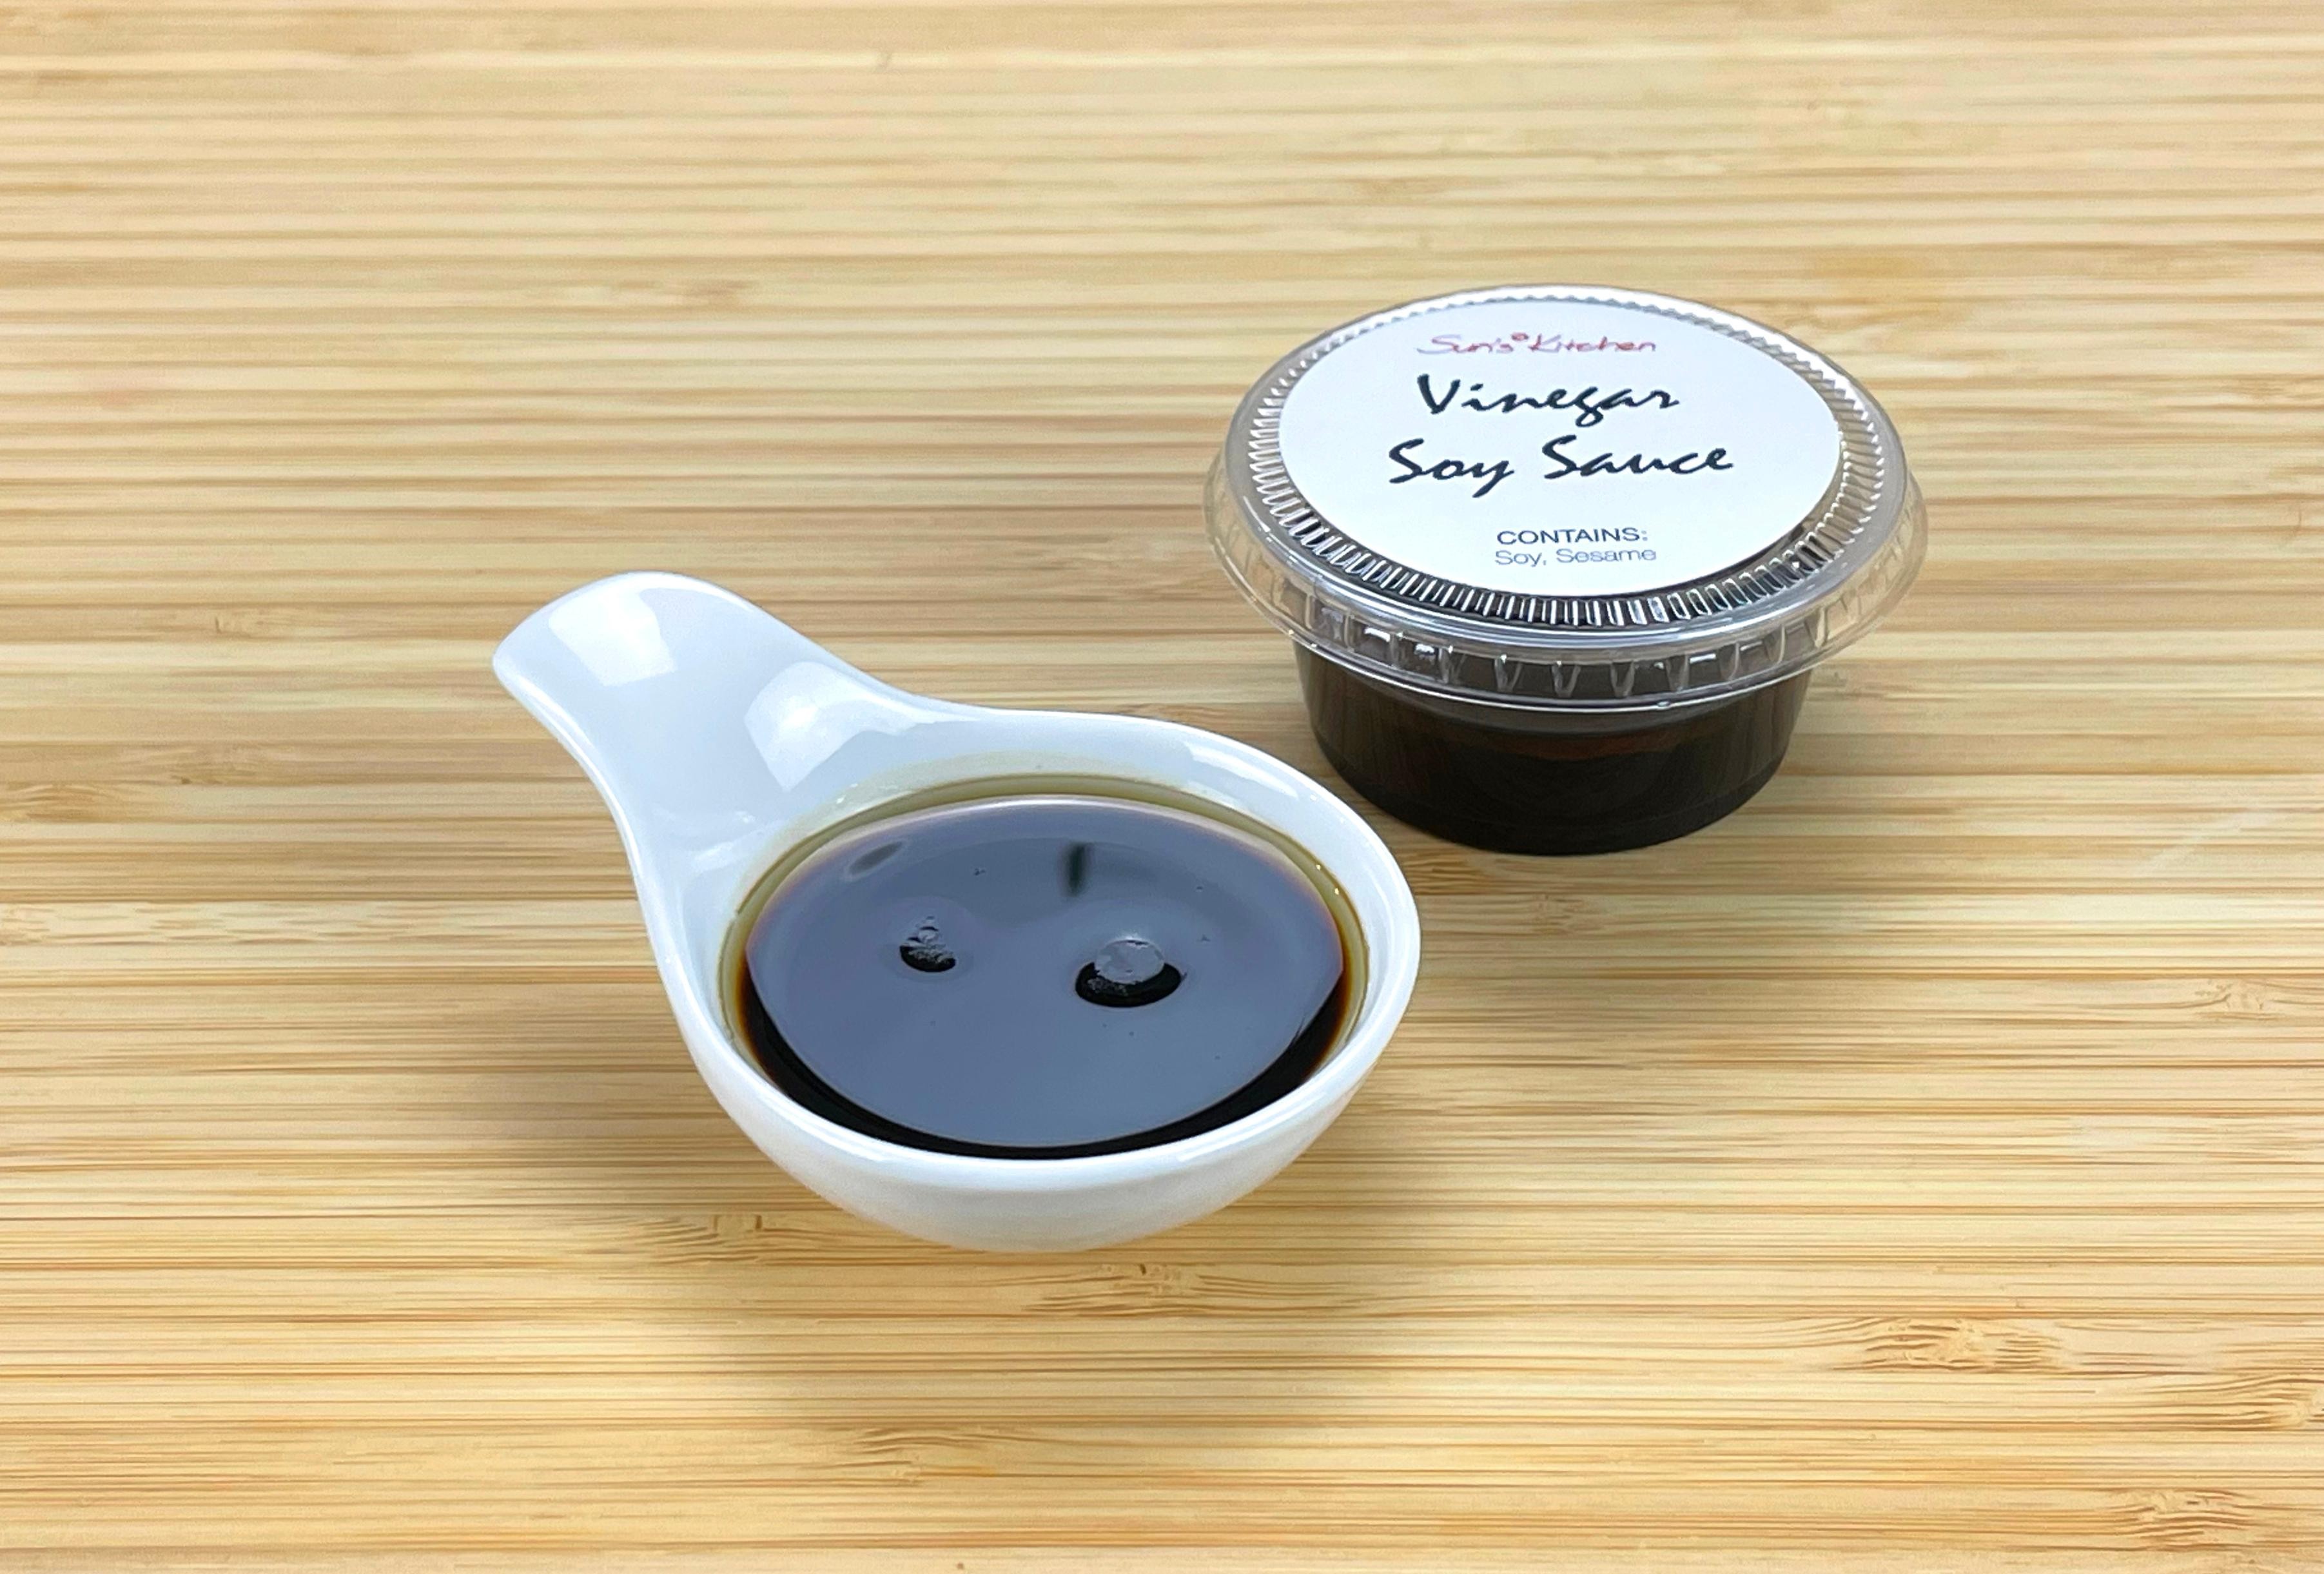 Vinegar & Soy Sauce